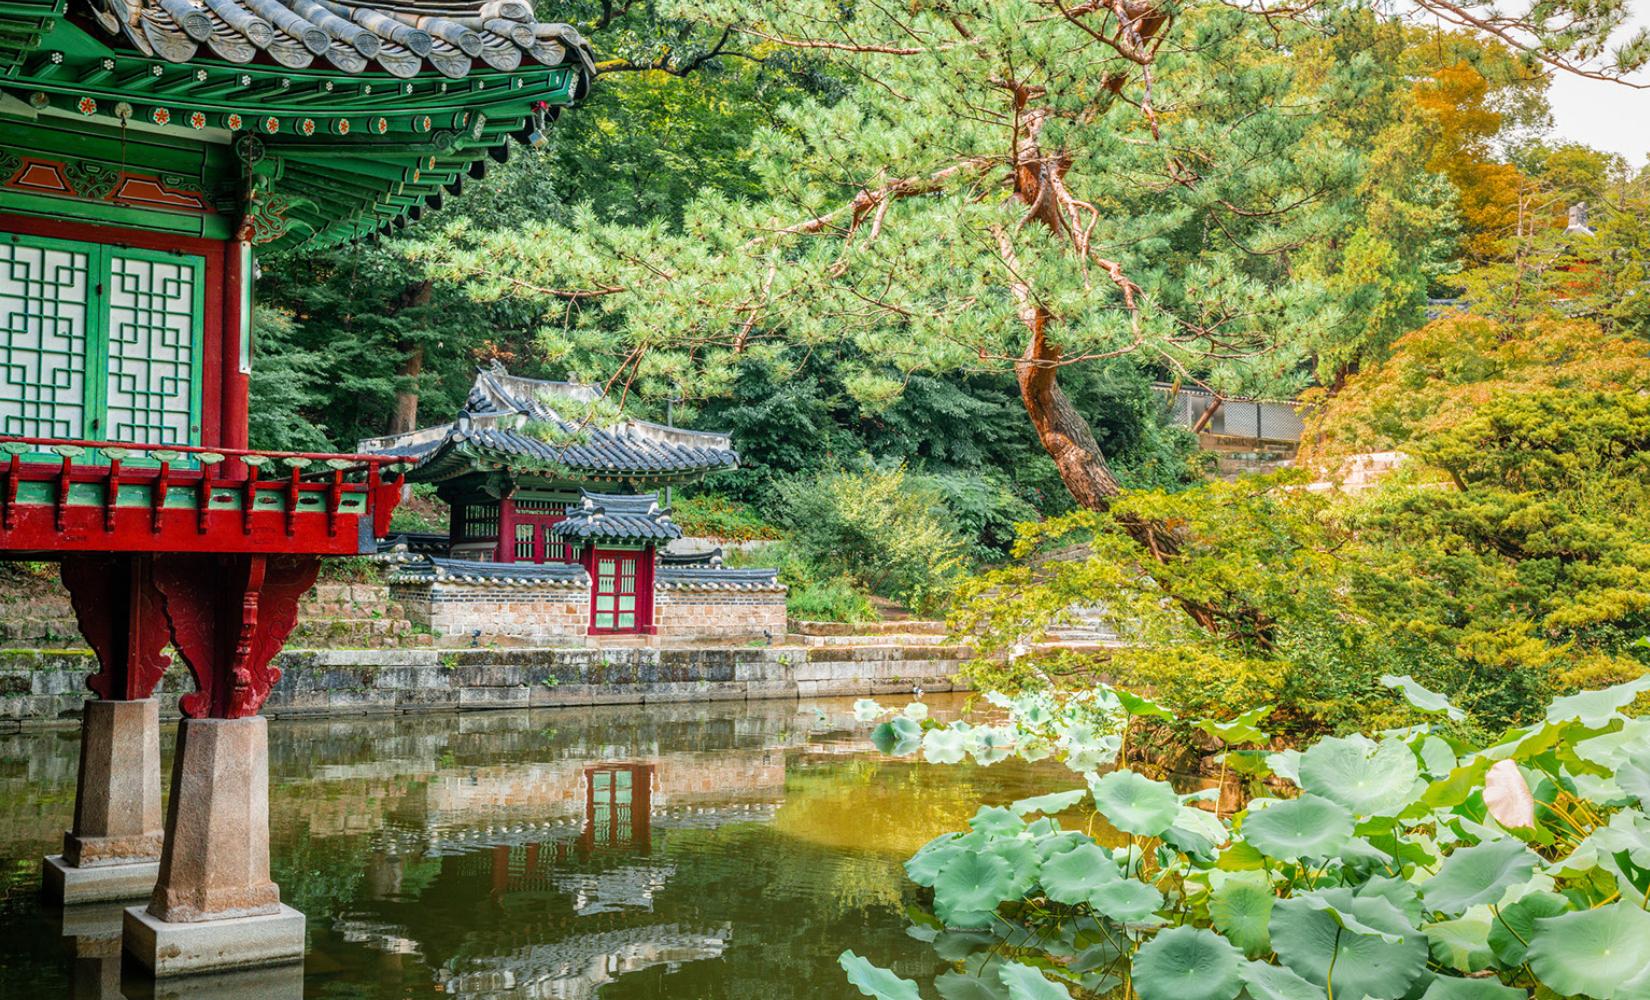 Changdeokgung Palace and the Secret Garden Information